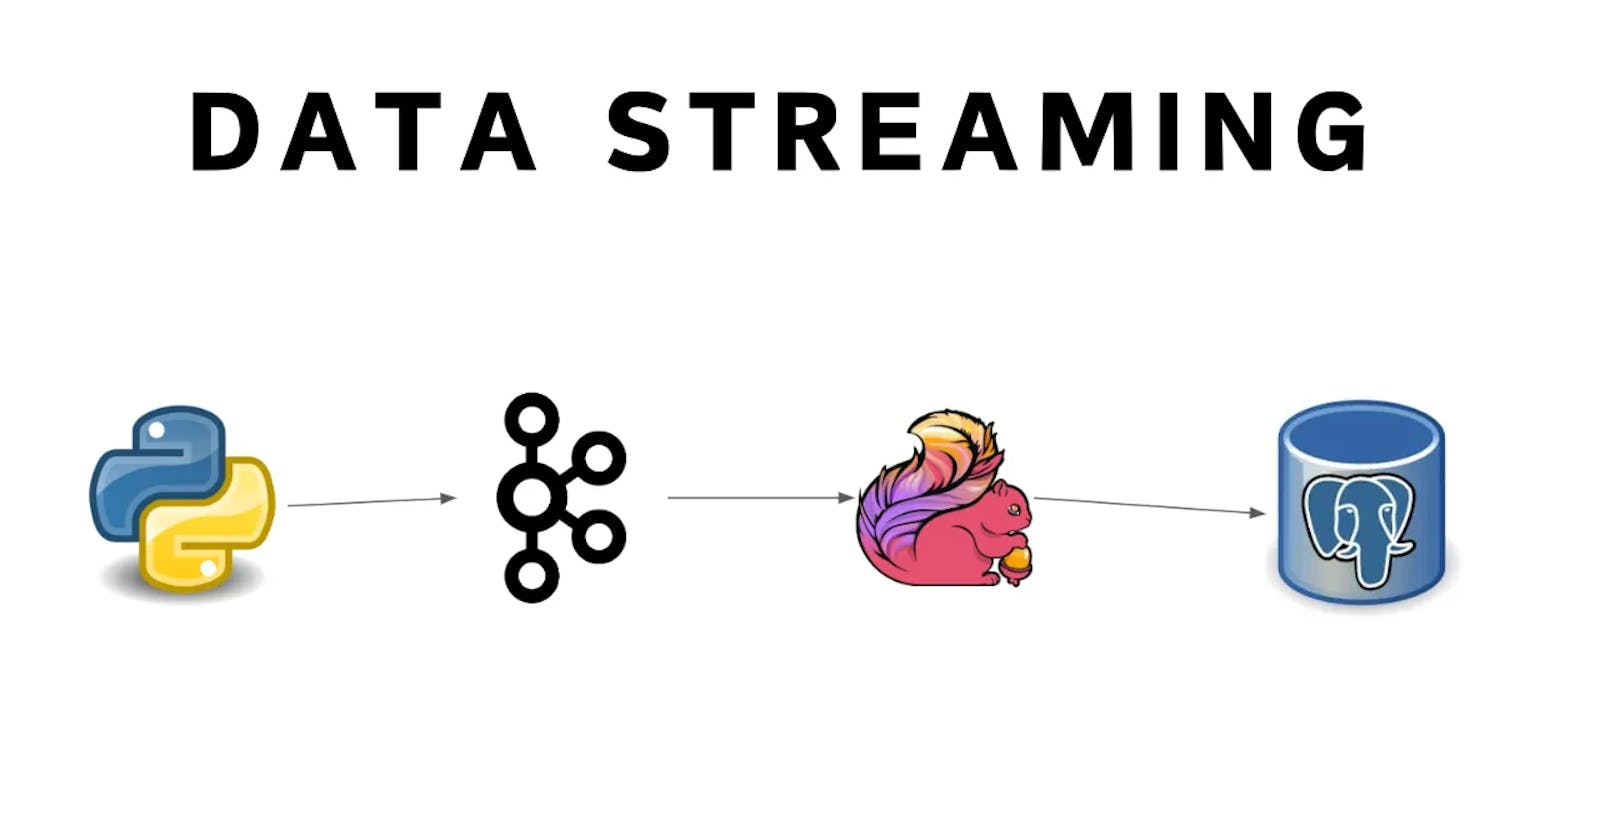 Pipeline Apache Flink, Kafka, Postgres, Elasticsearch, Kibana For Real-Time Streaming